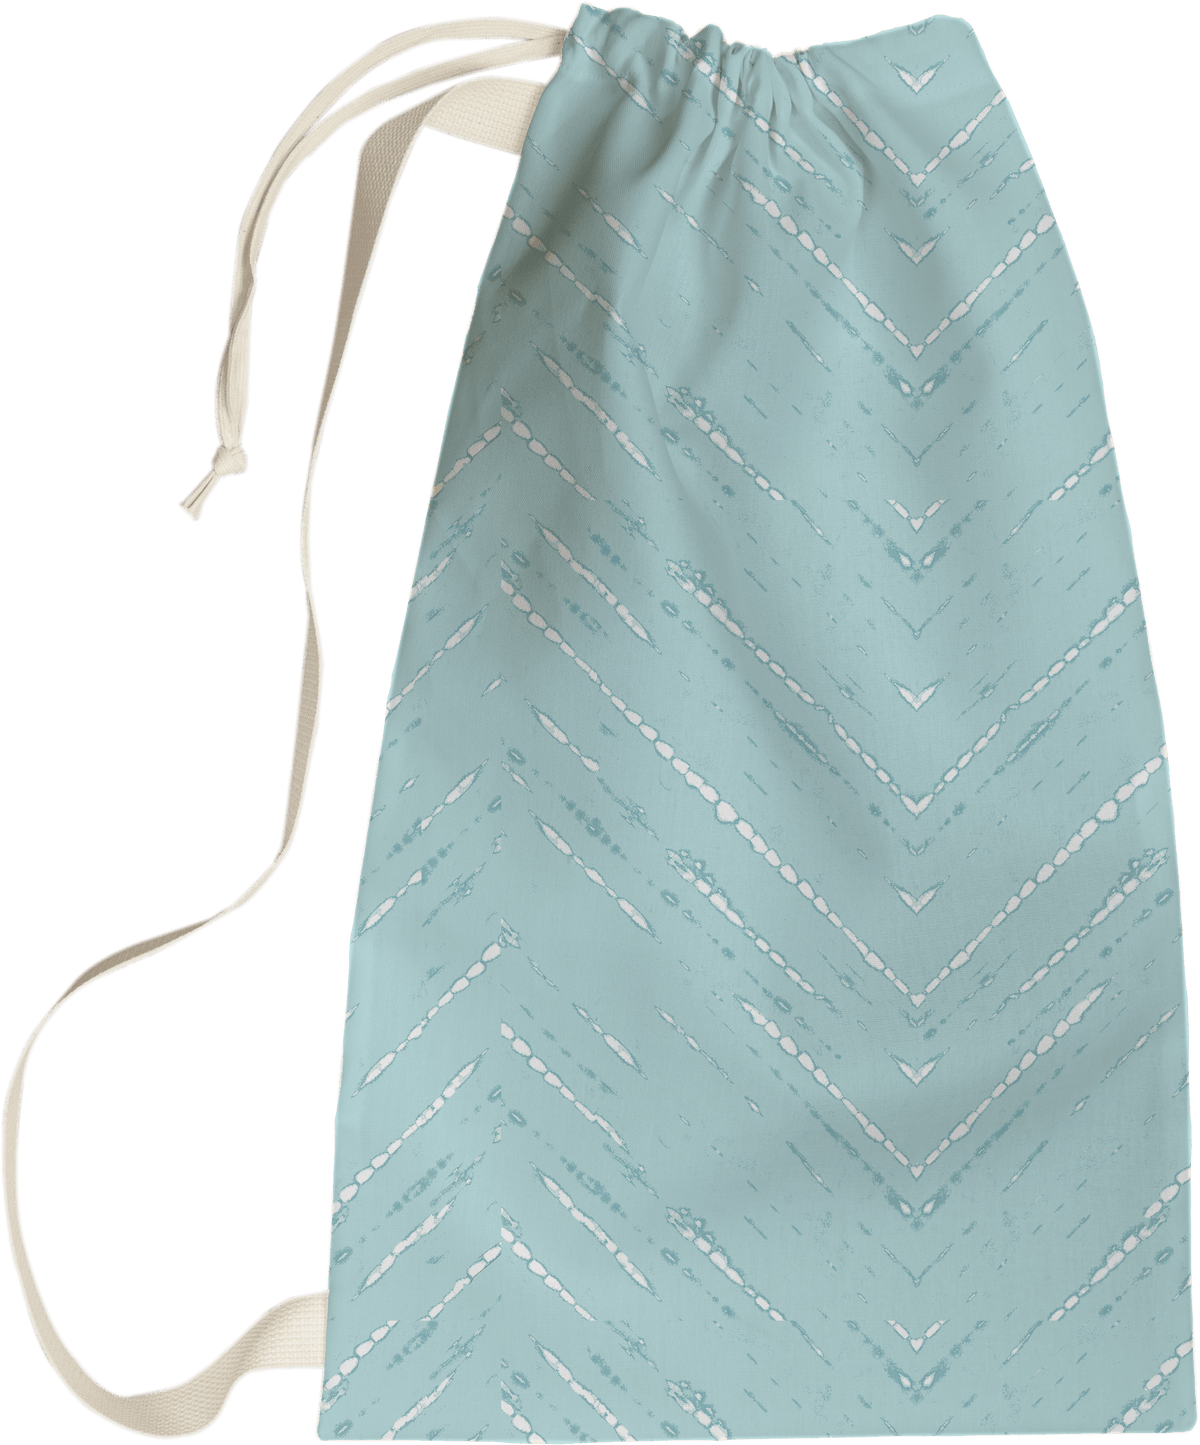 Laundry Bag - Mariko Seafoam Room Accessories, Laundry Bags MWW 